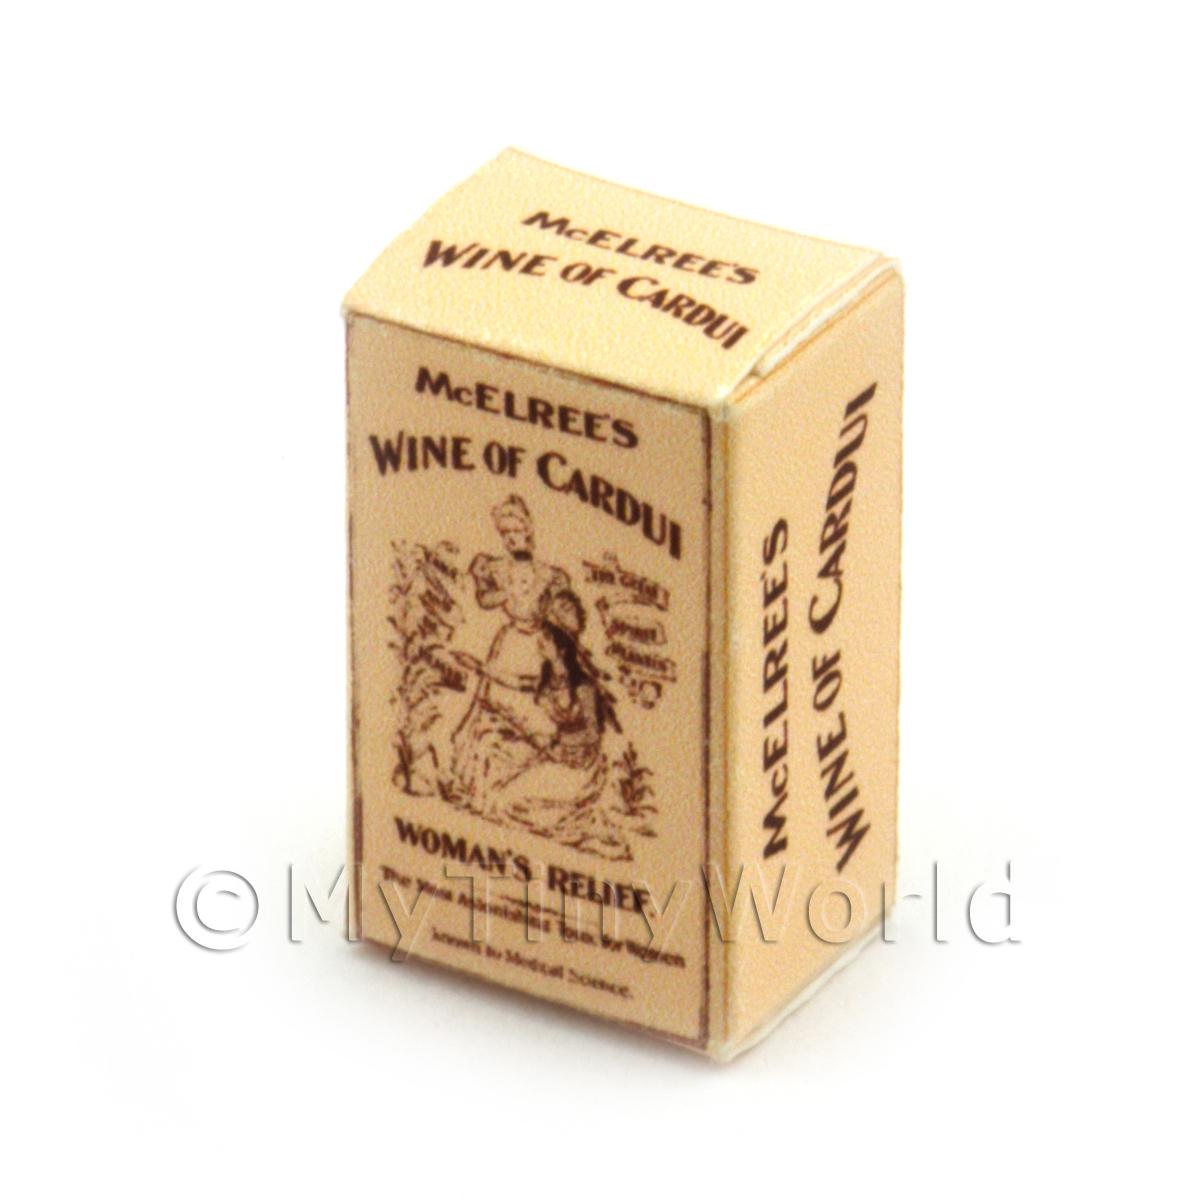 Dolls House miniatura mcelrees vino di cardui BOX 